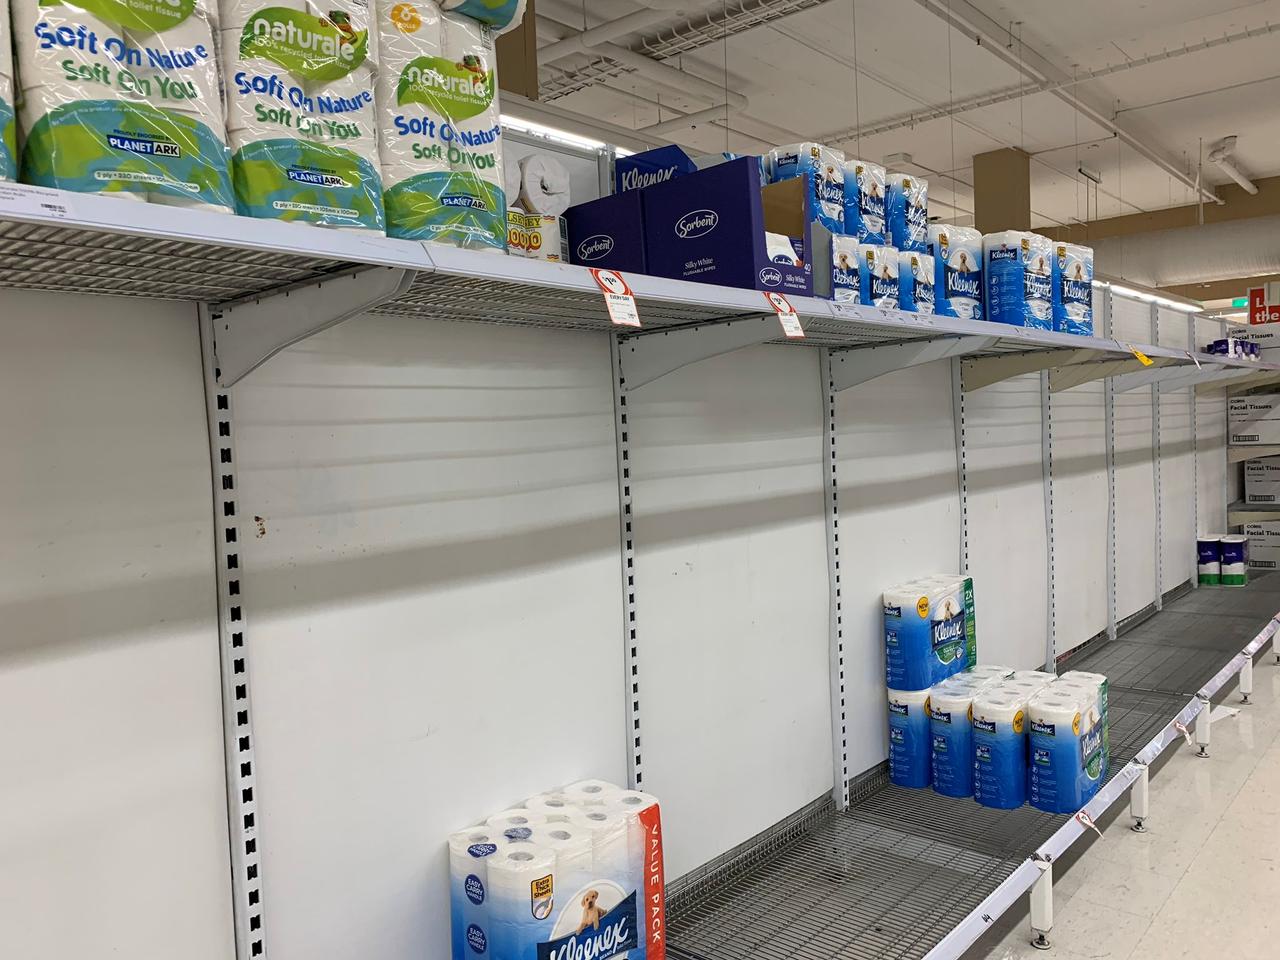 Australian stores ration toilet paper amid coronavirus panic buying